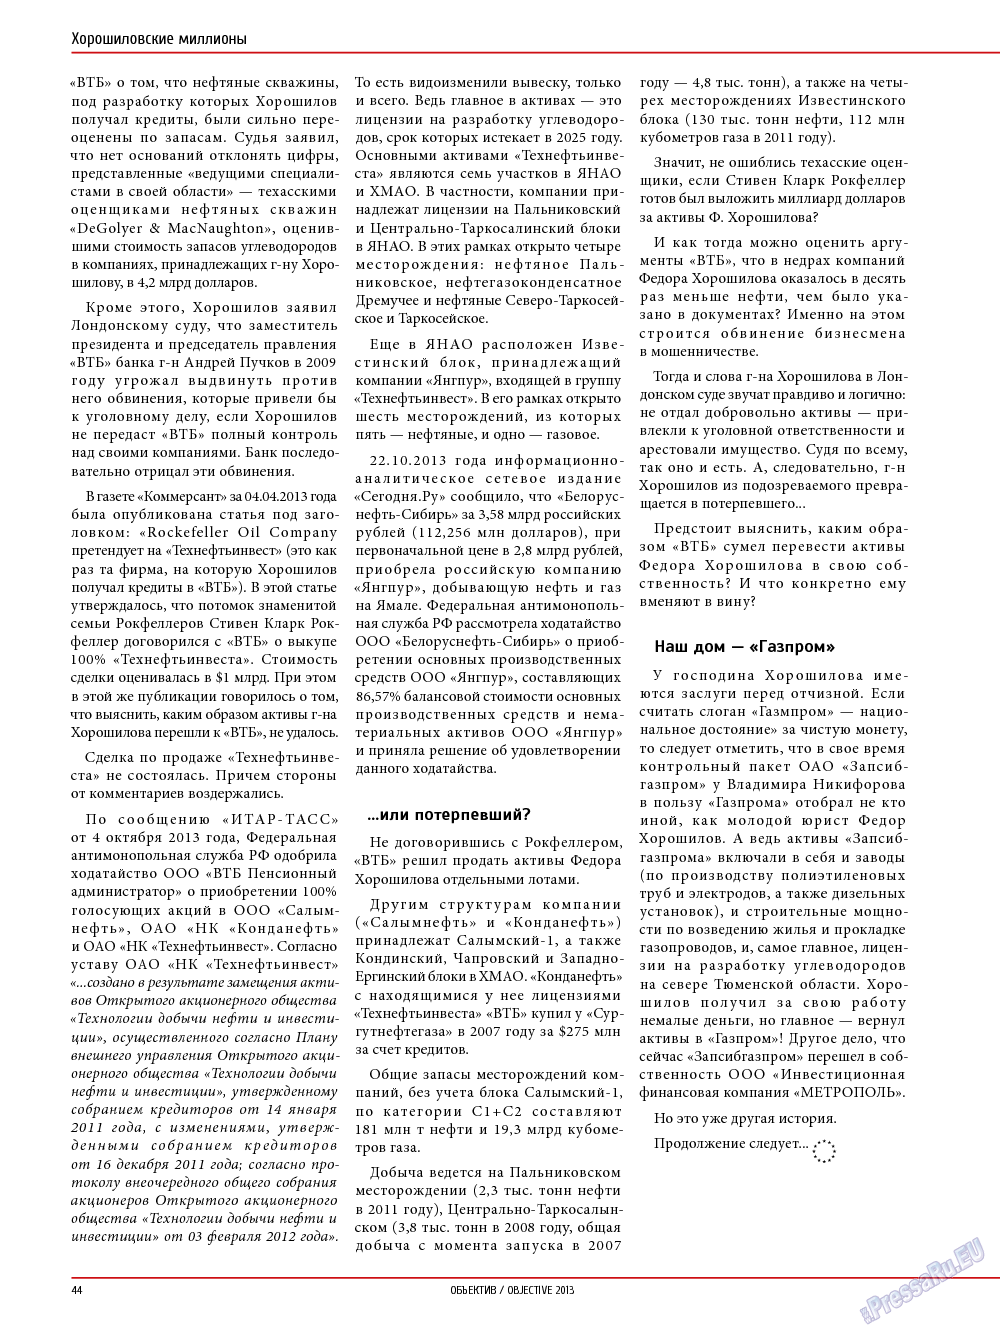 Объектив EU, журнал. 2014 №1 стр.44